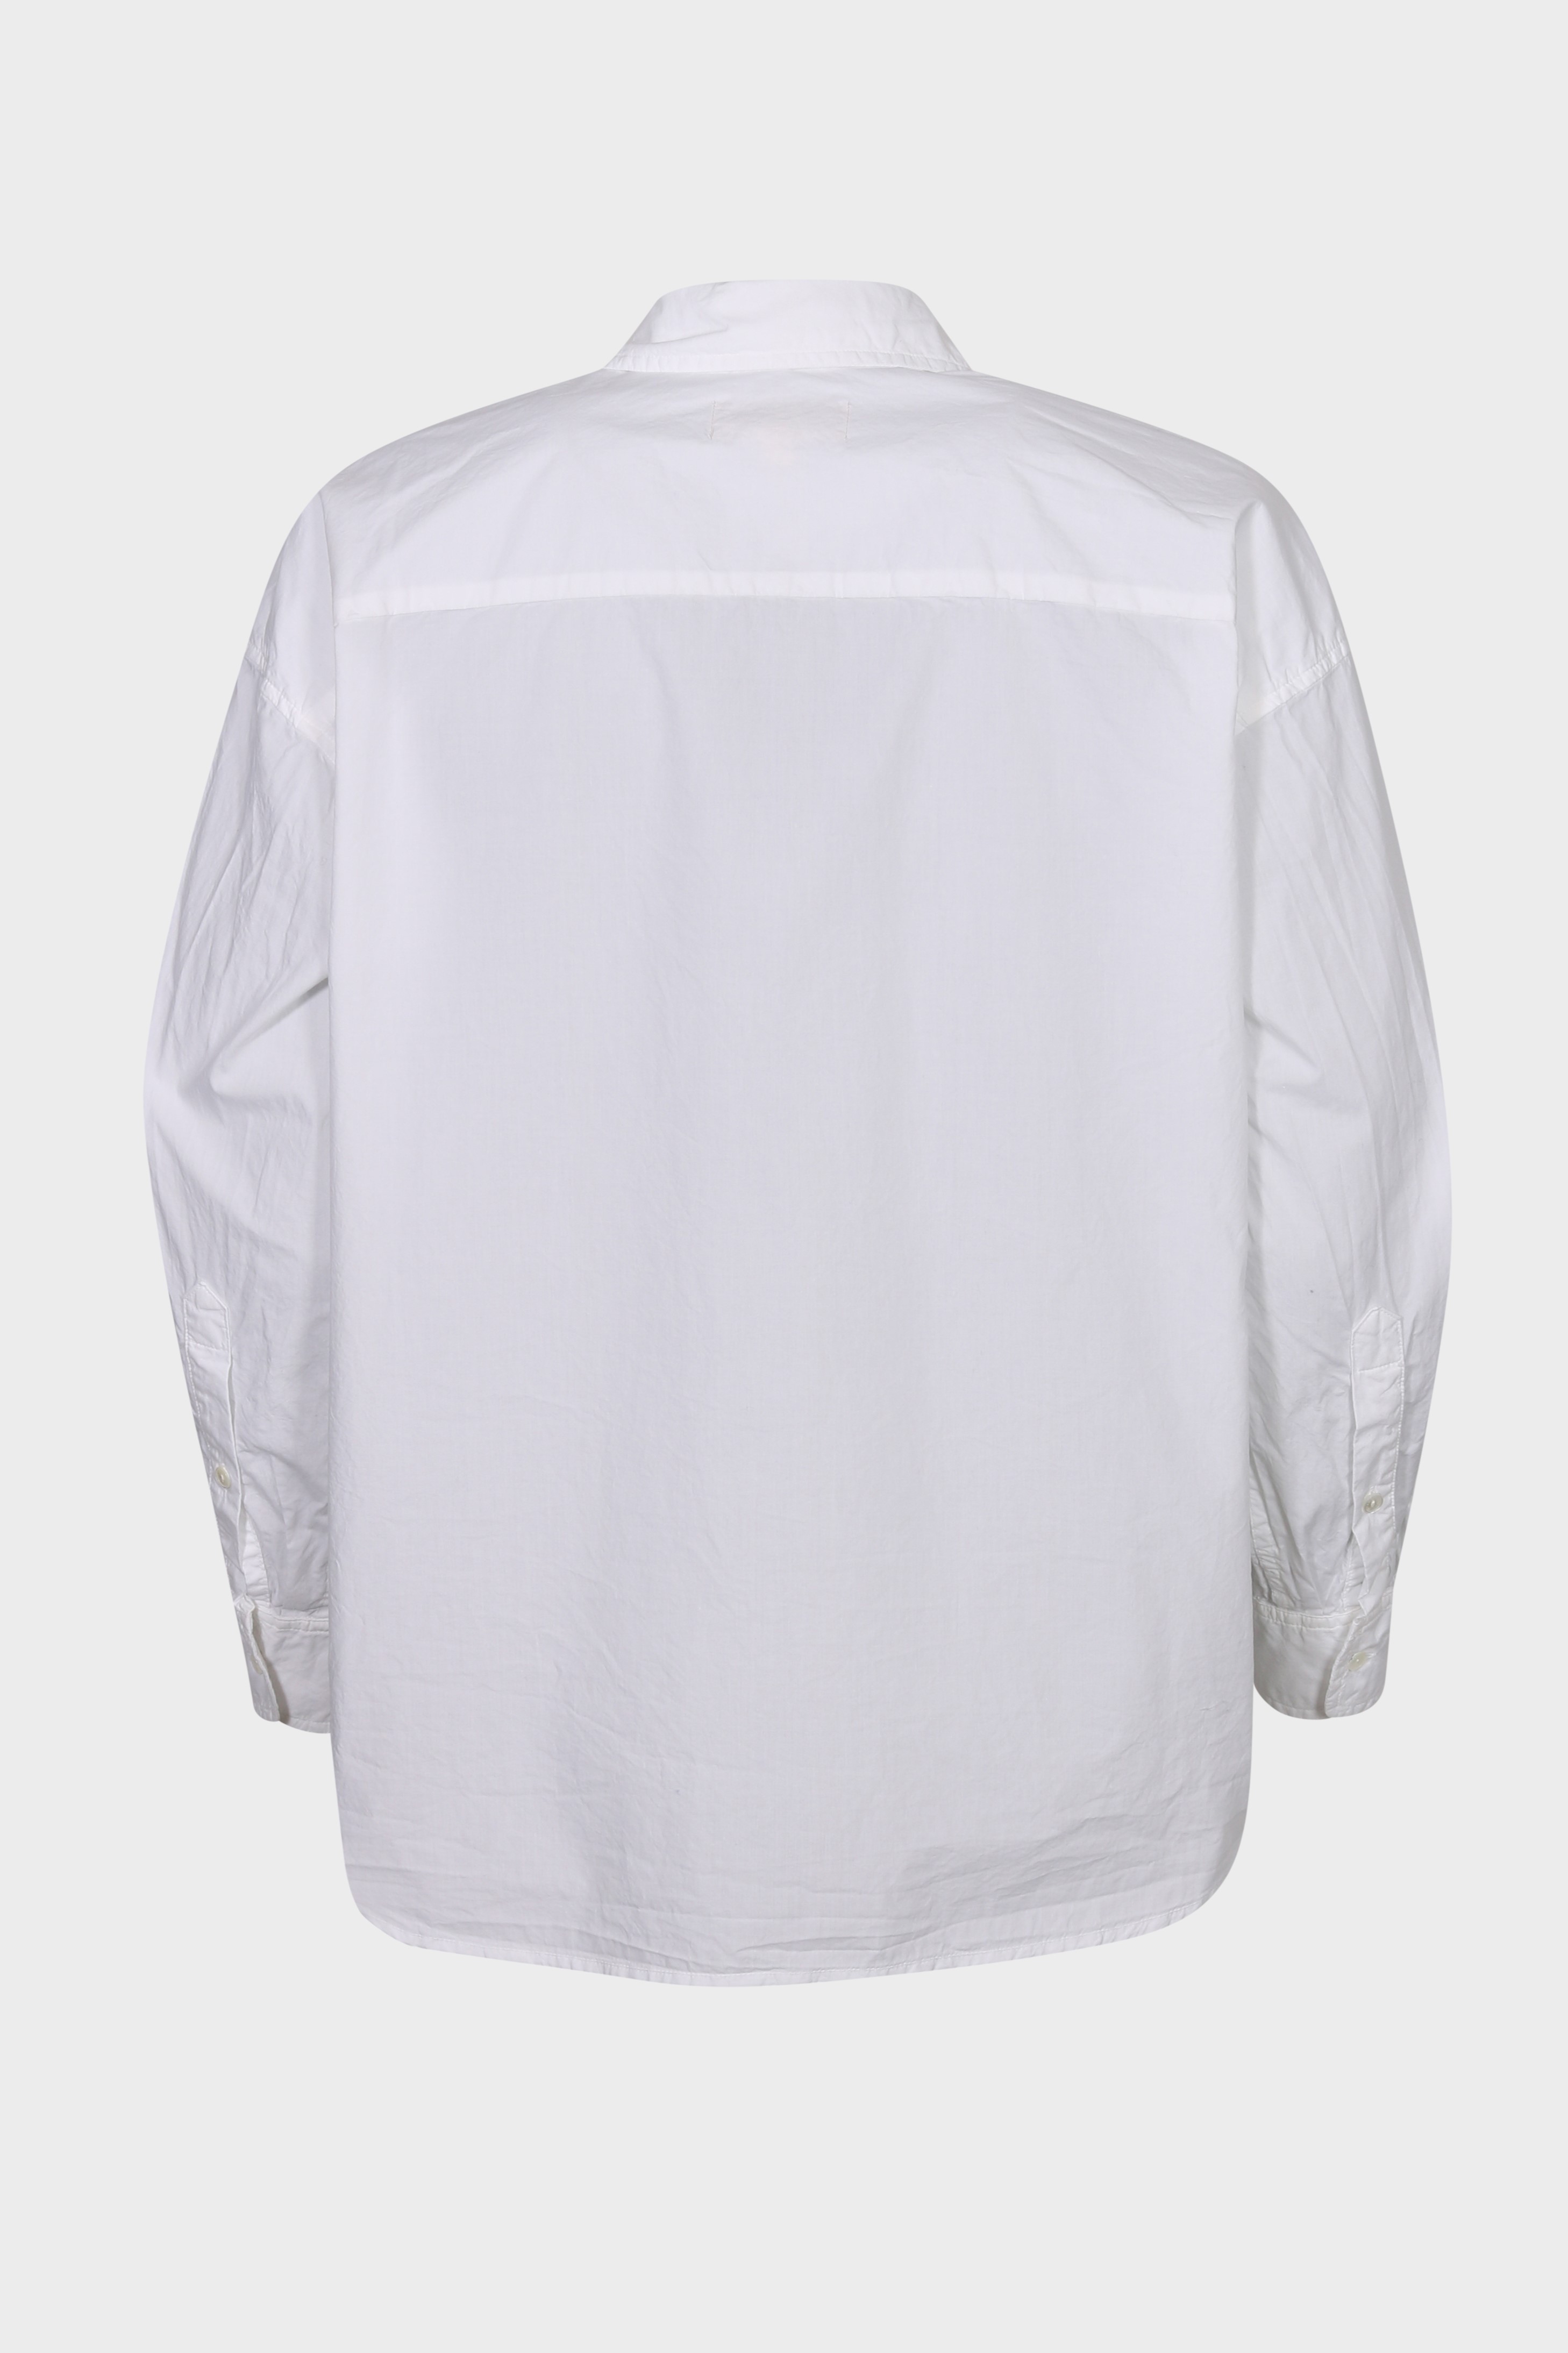 NILI LOTAN Mael Oversized Shirt in White M